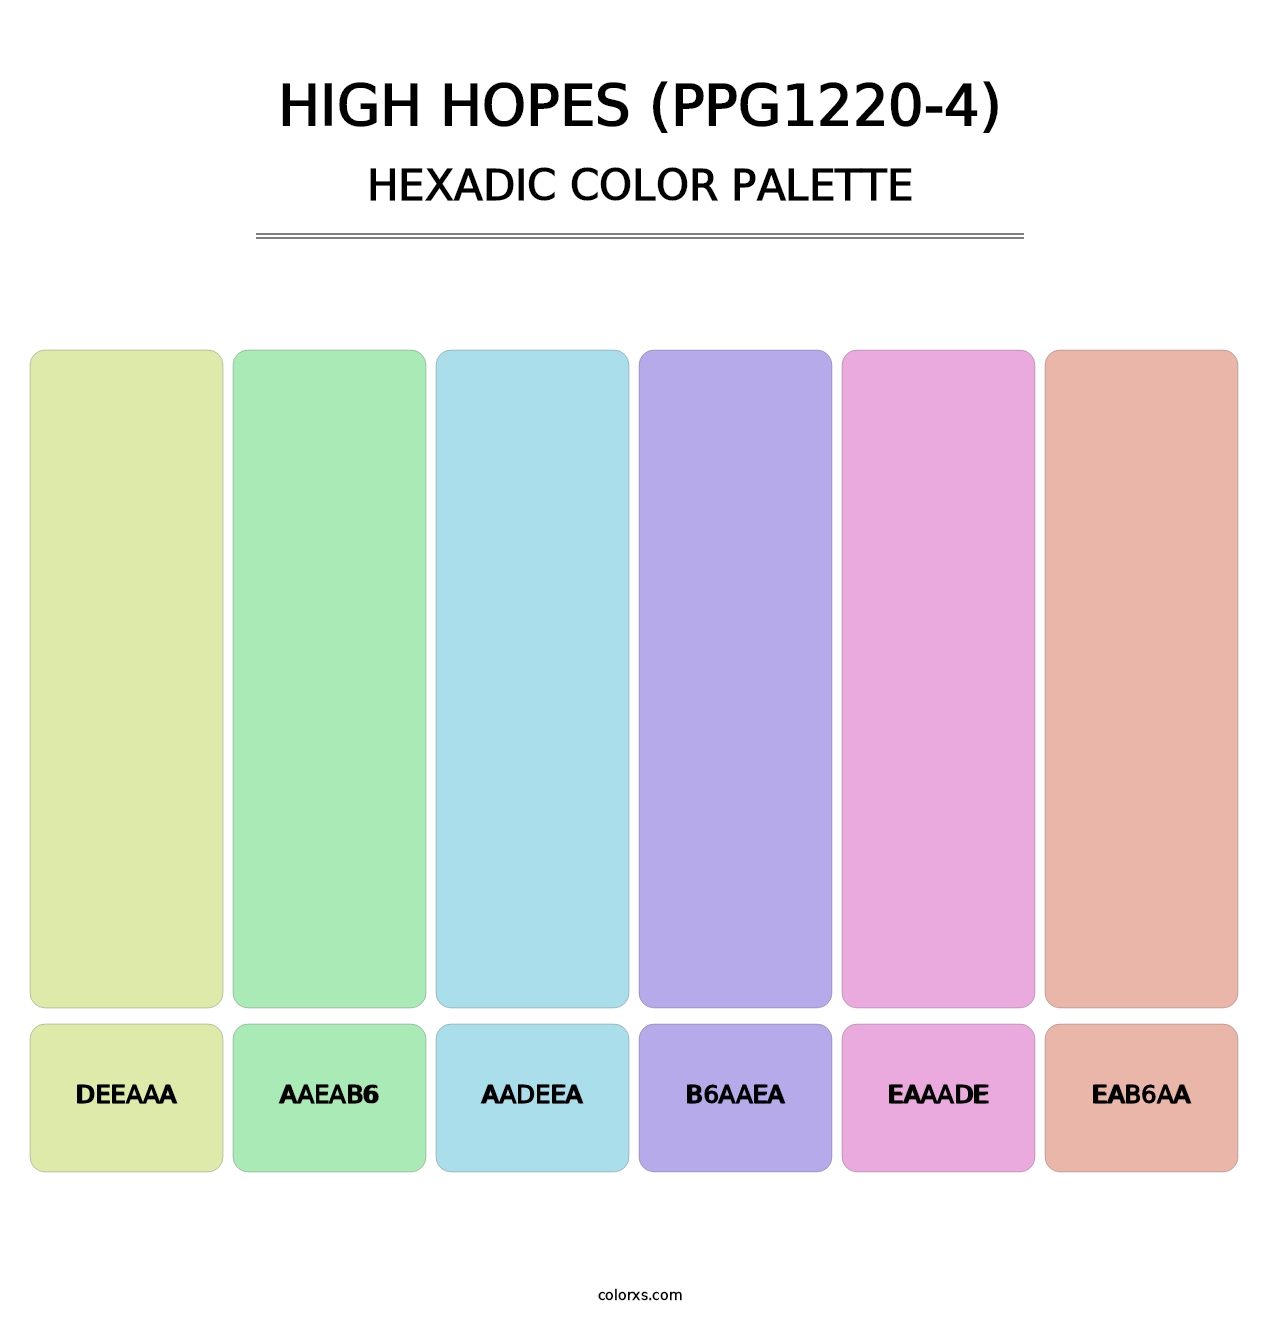 High Hopes (PPG1220-4) - Hexadic Color Palette